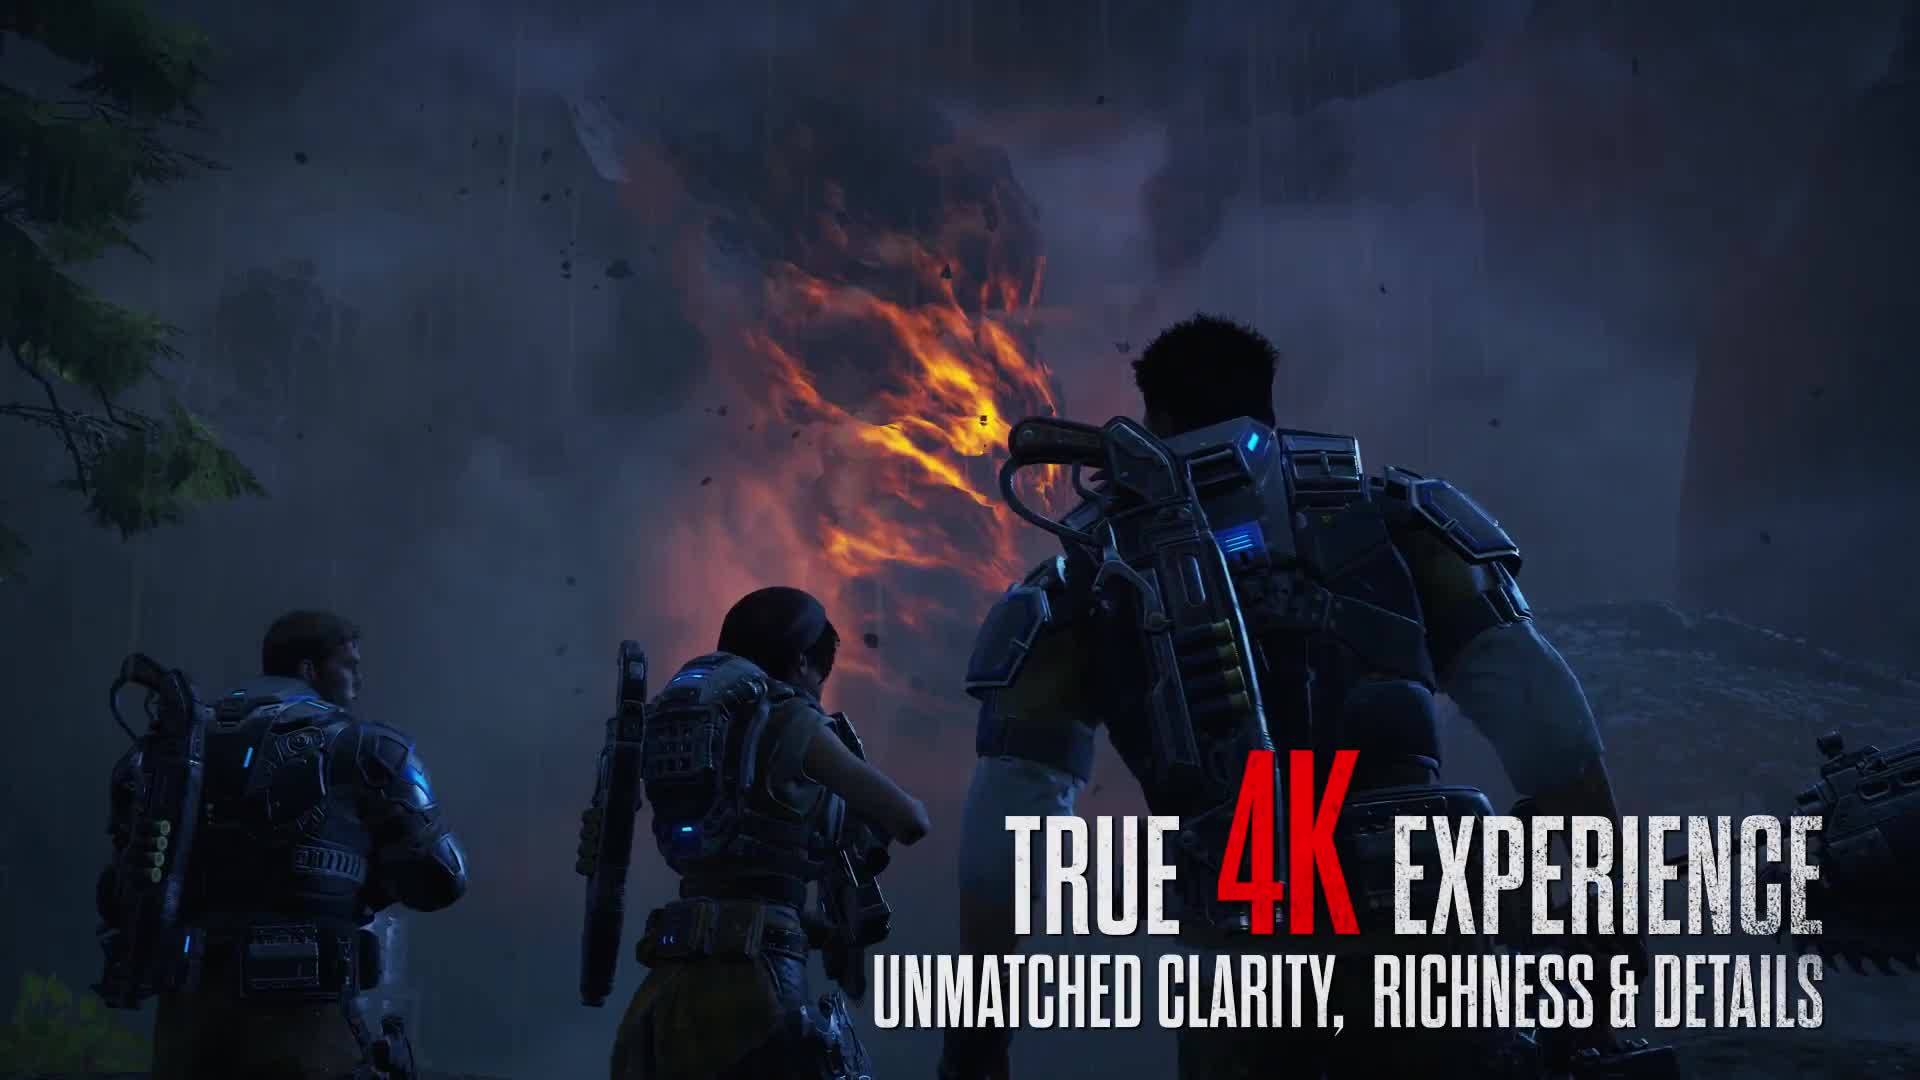 Gears of War 4 - Xbox One X update trailer